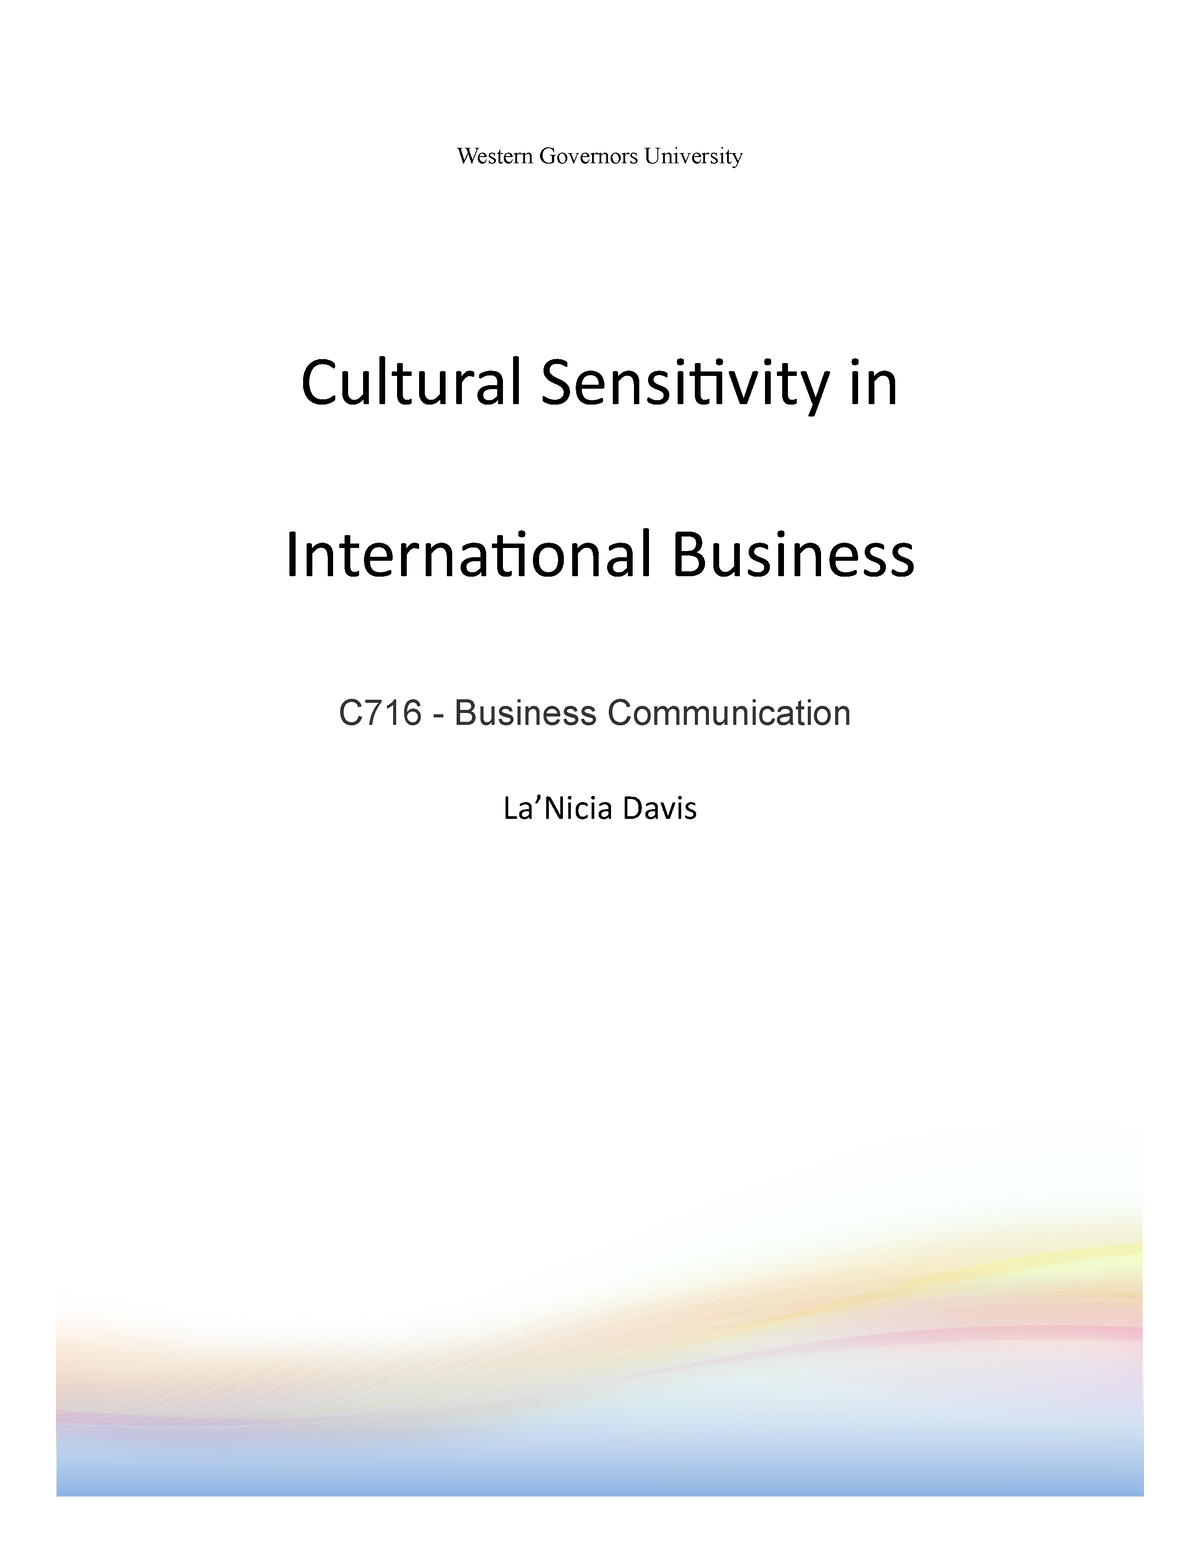 cultural sensitivity essay wgu